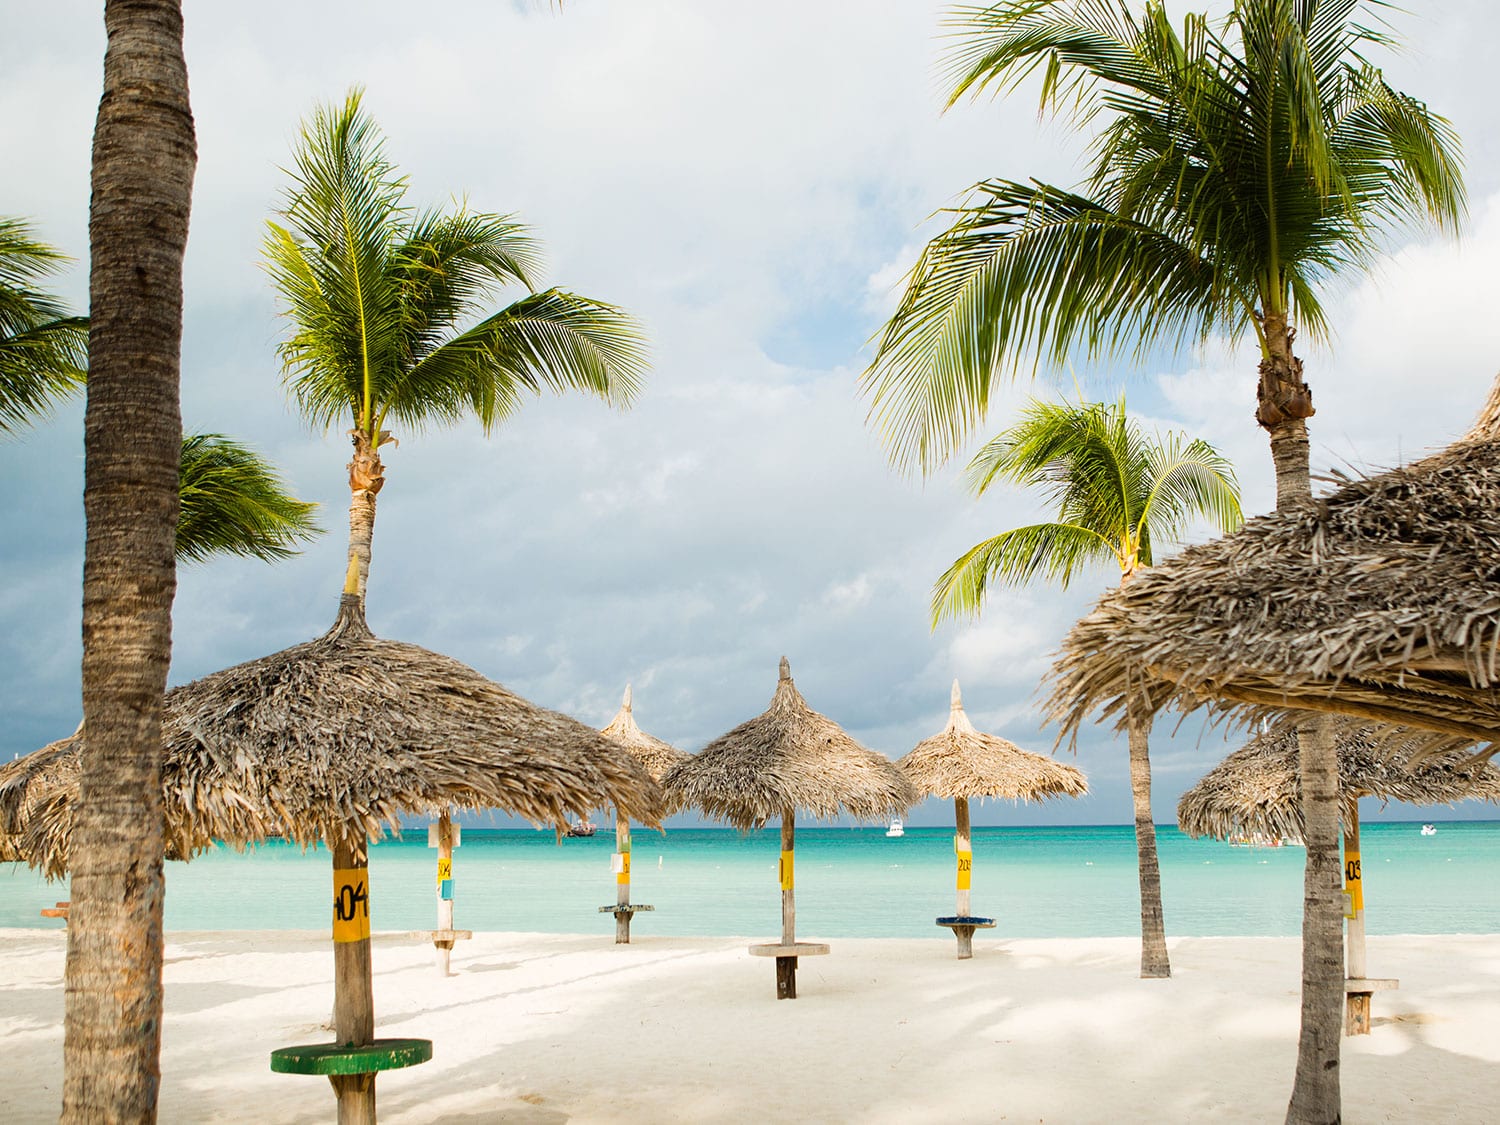 Umbrella palms on the shores of a beach.